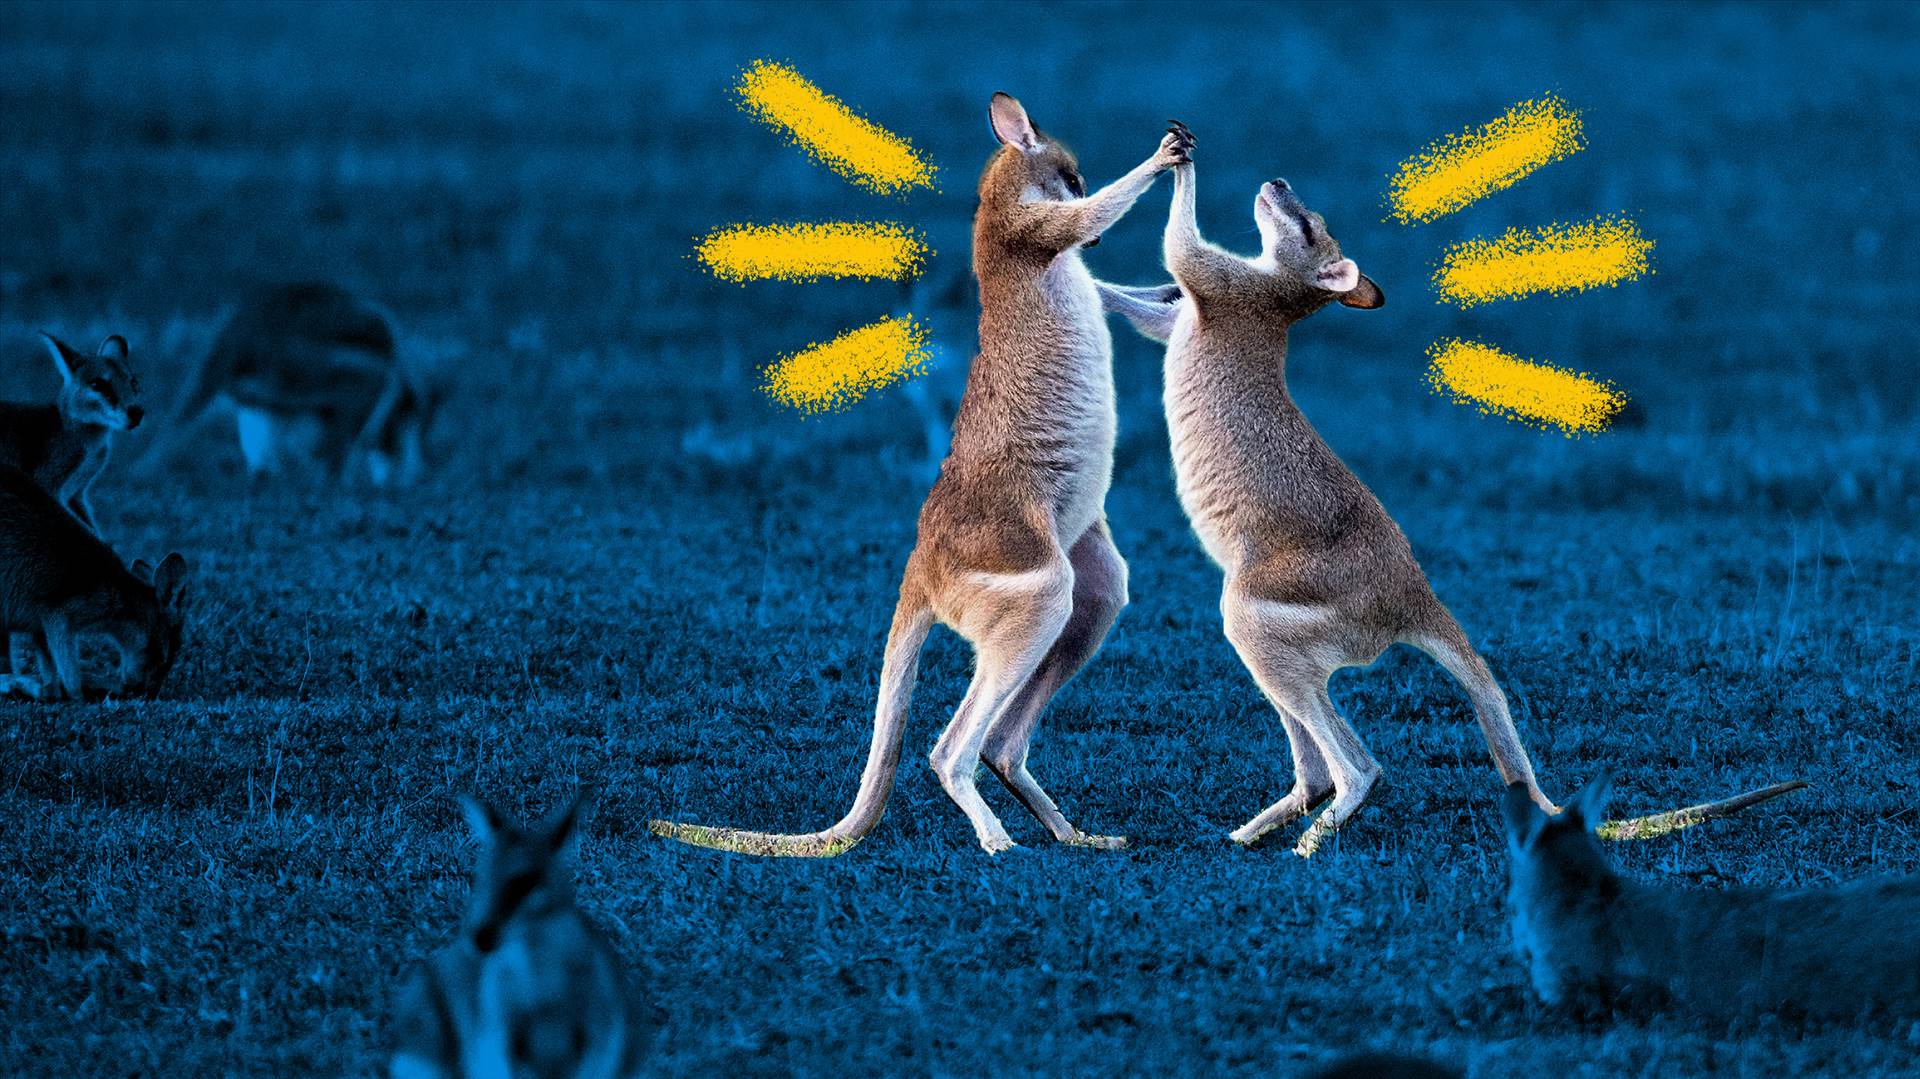 kangaroos-fighting-illustration-data.jpg  by Acef Ebrahimi